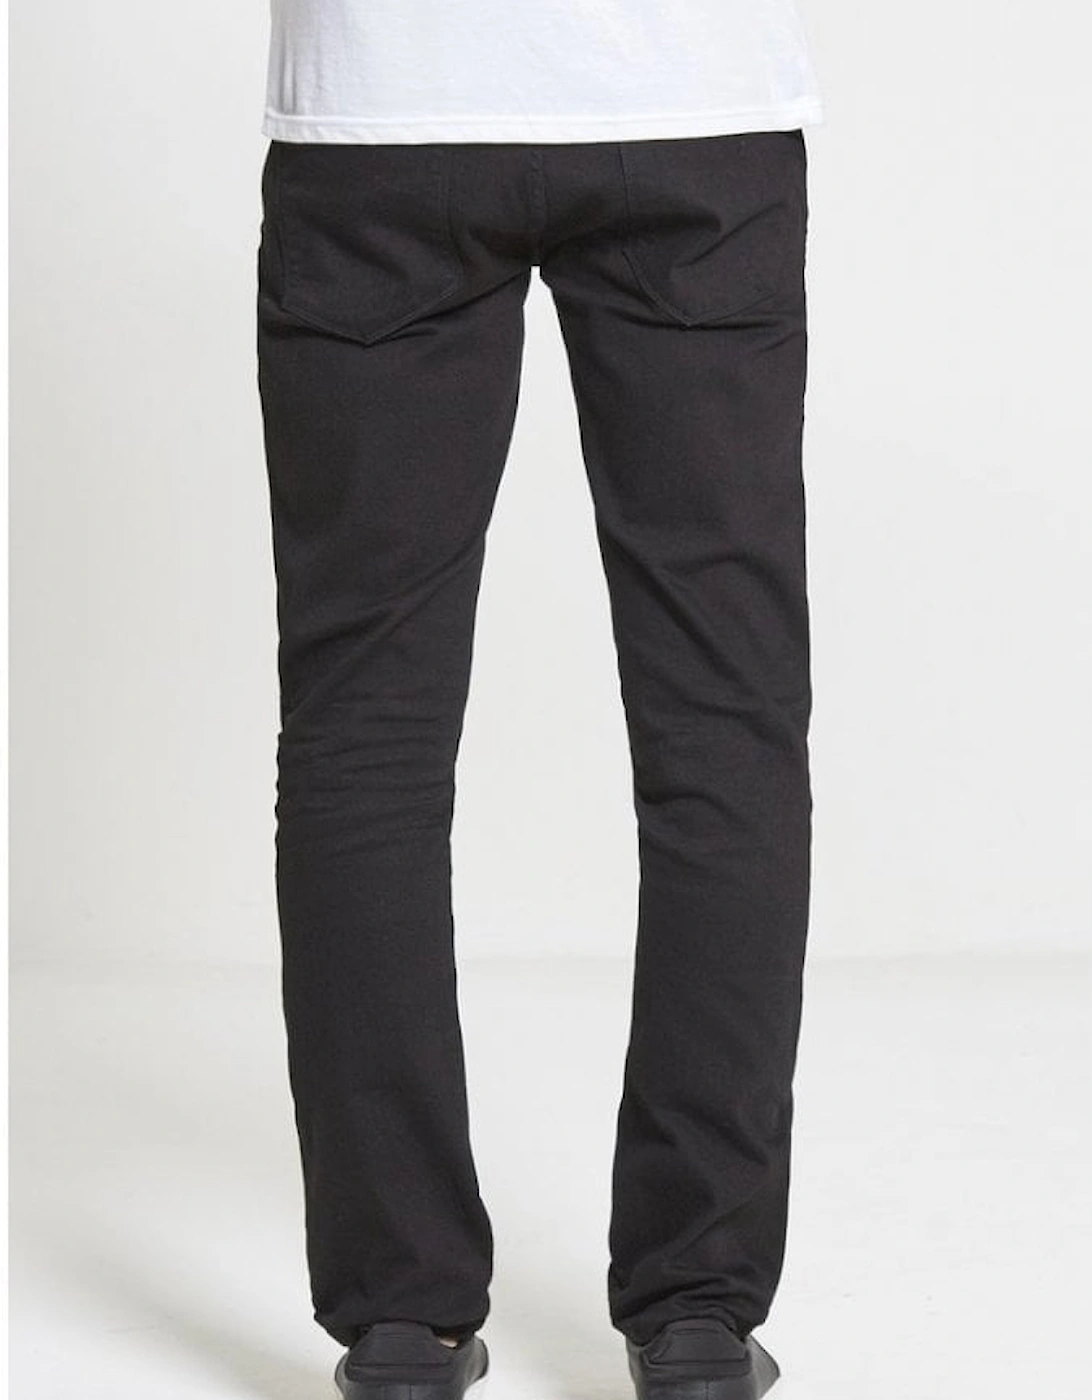 Ace slim stretch jeans - True Black